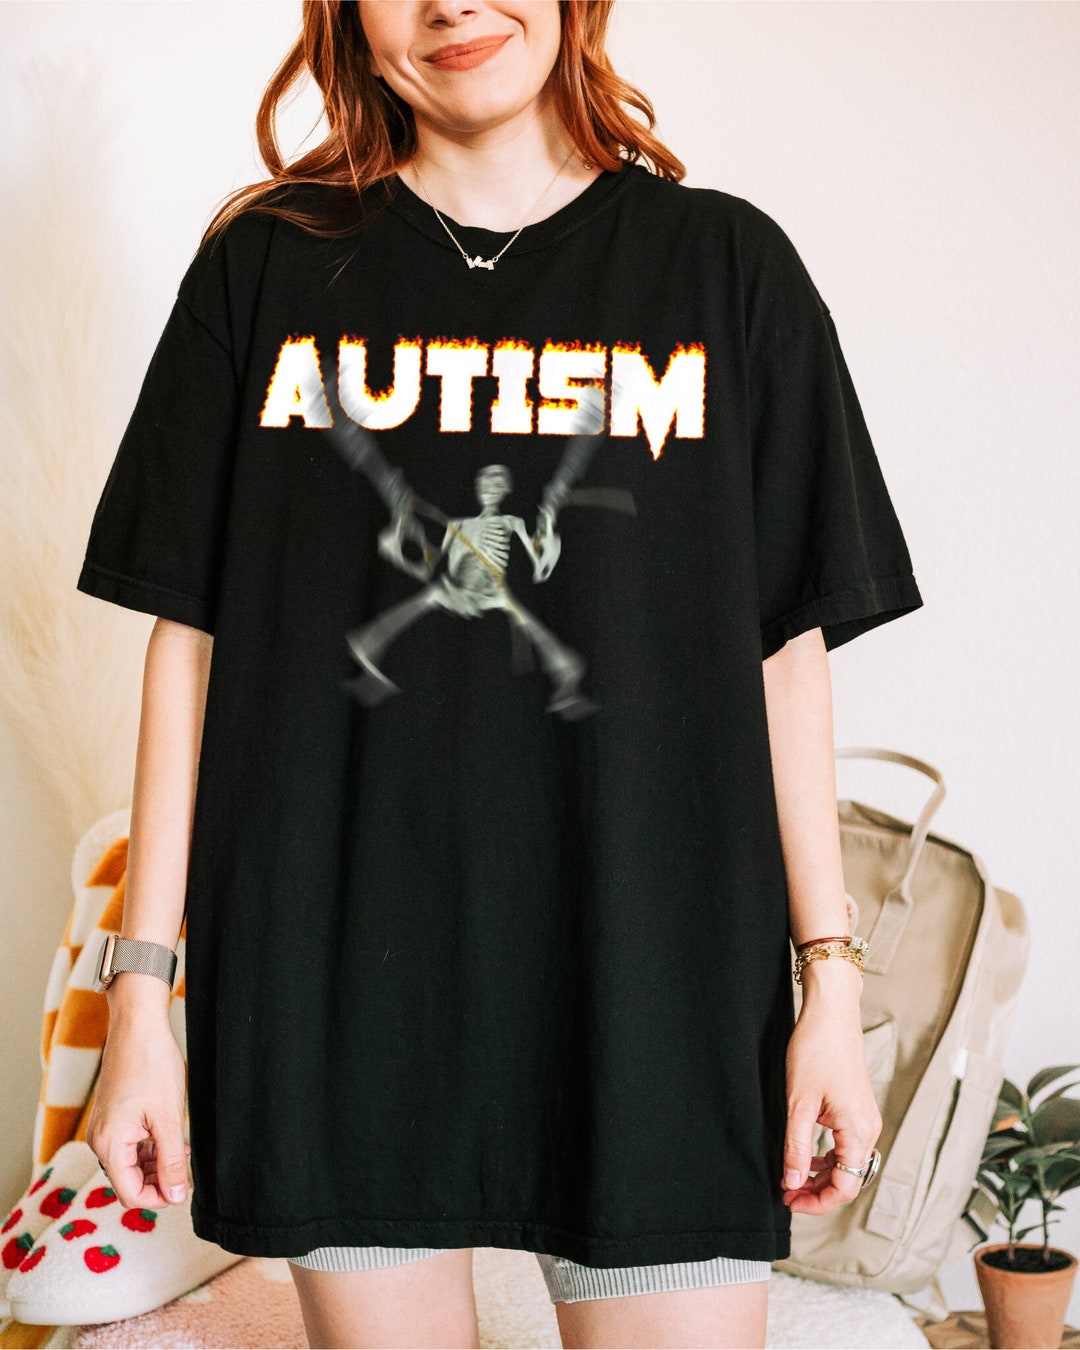 Ironic Autism Shirt Shooting Skeleton Meme Shirt Dark Humor Adult ...